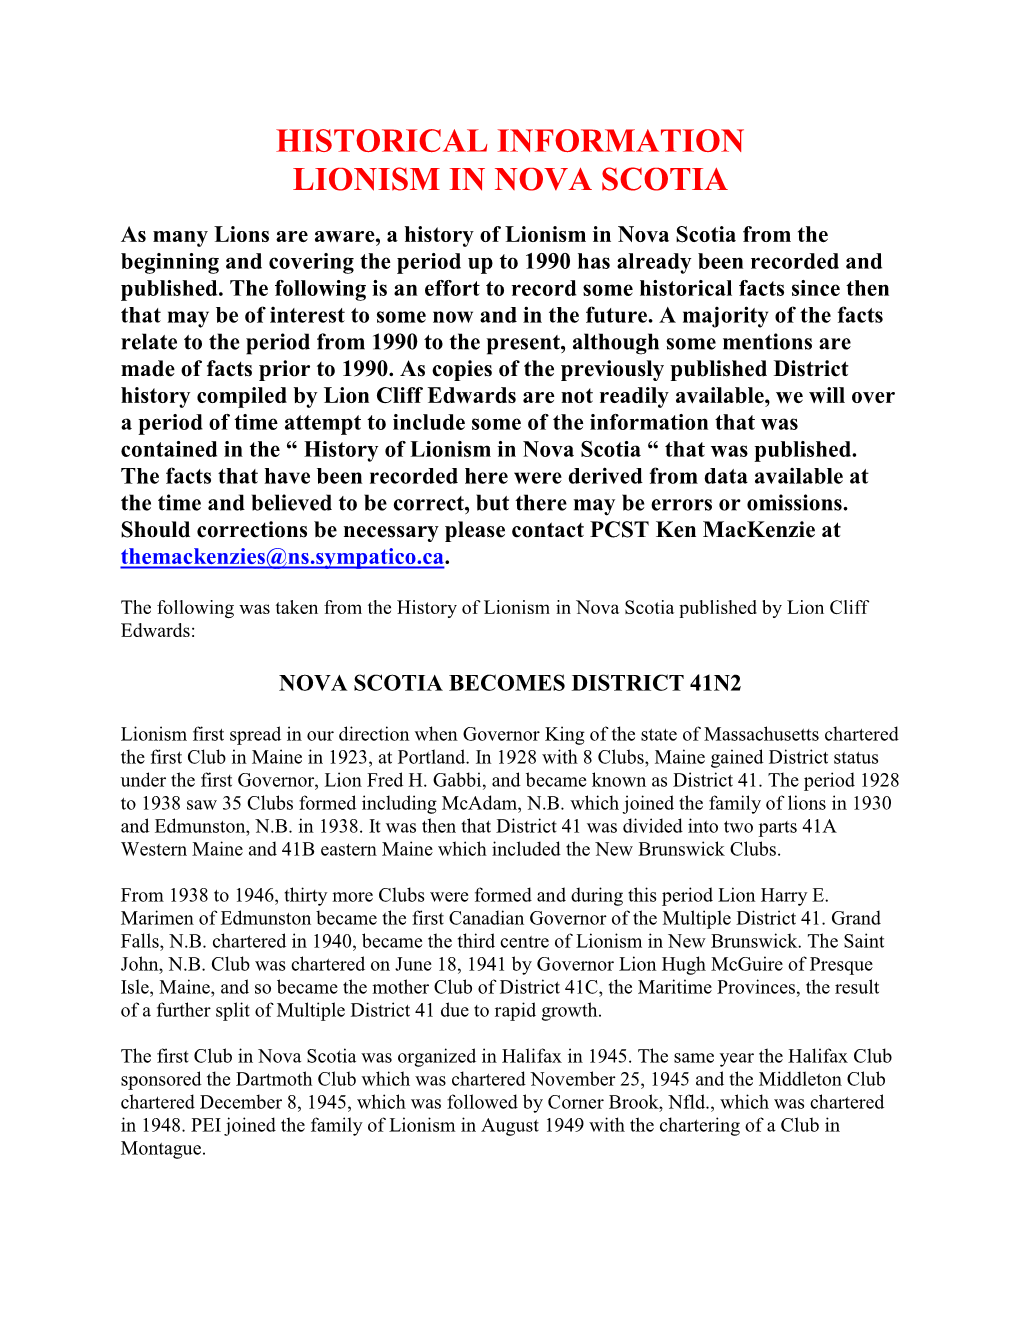 Historical Information Lionism in Nova Scotia